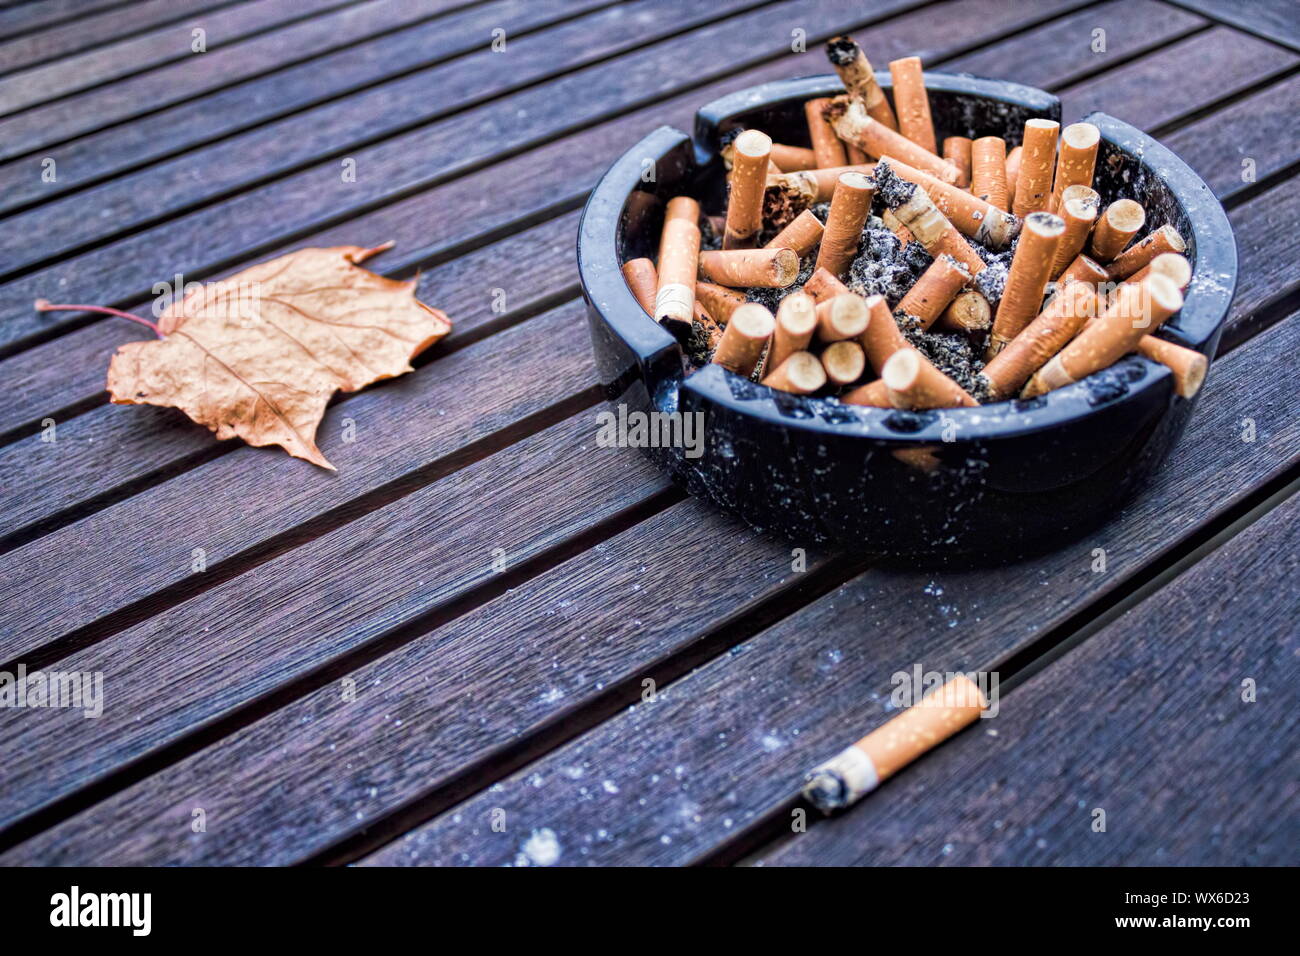 nicotine addiction Stock Photo